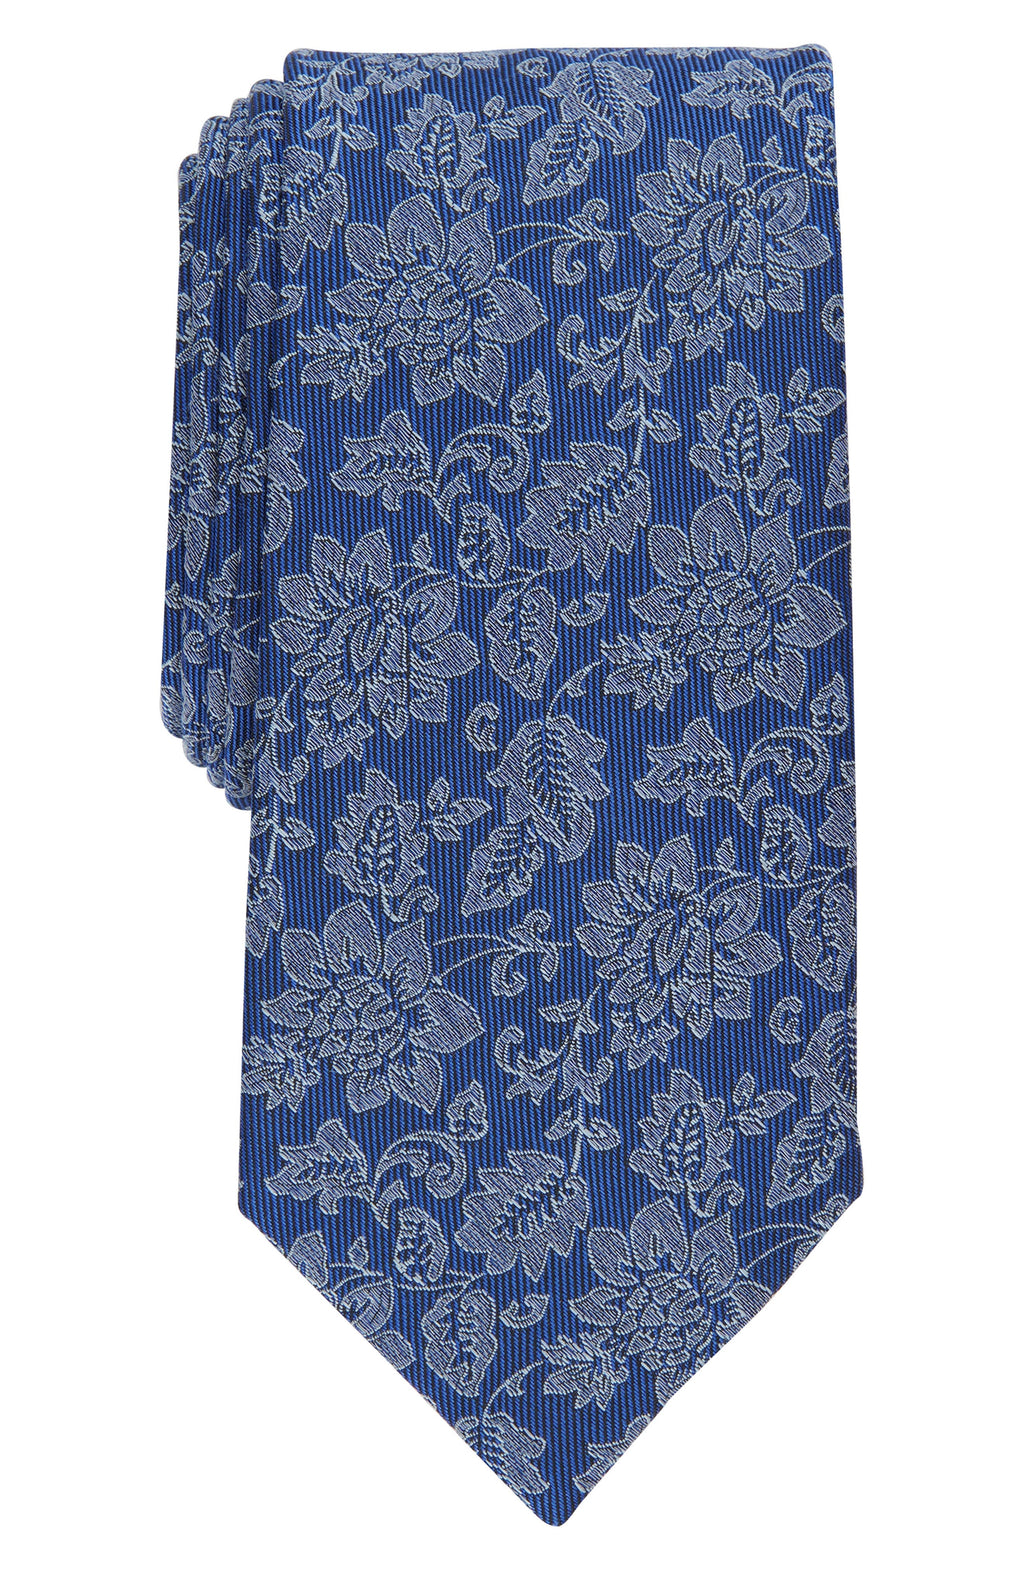 SAVILE ROW CO Harot Floral Tie, Main, color, BLUE